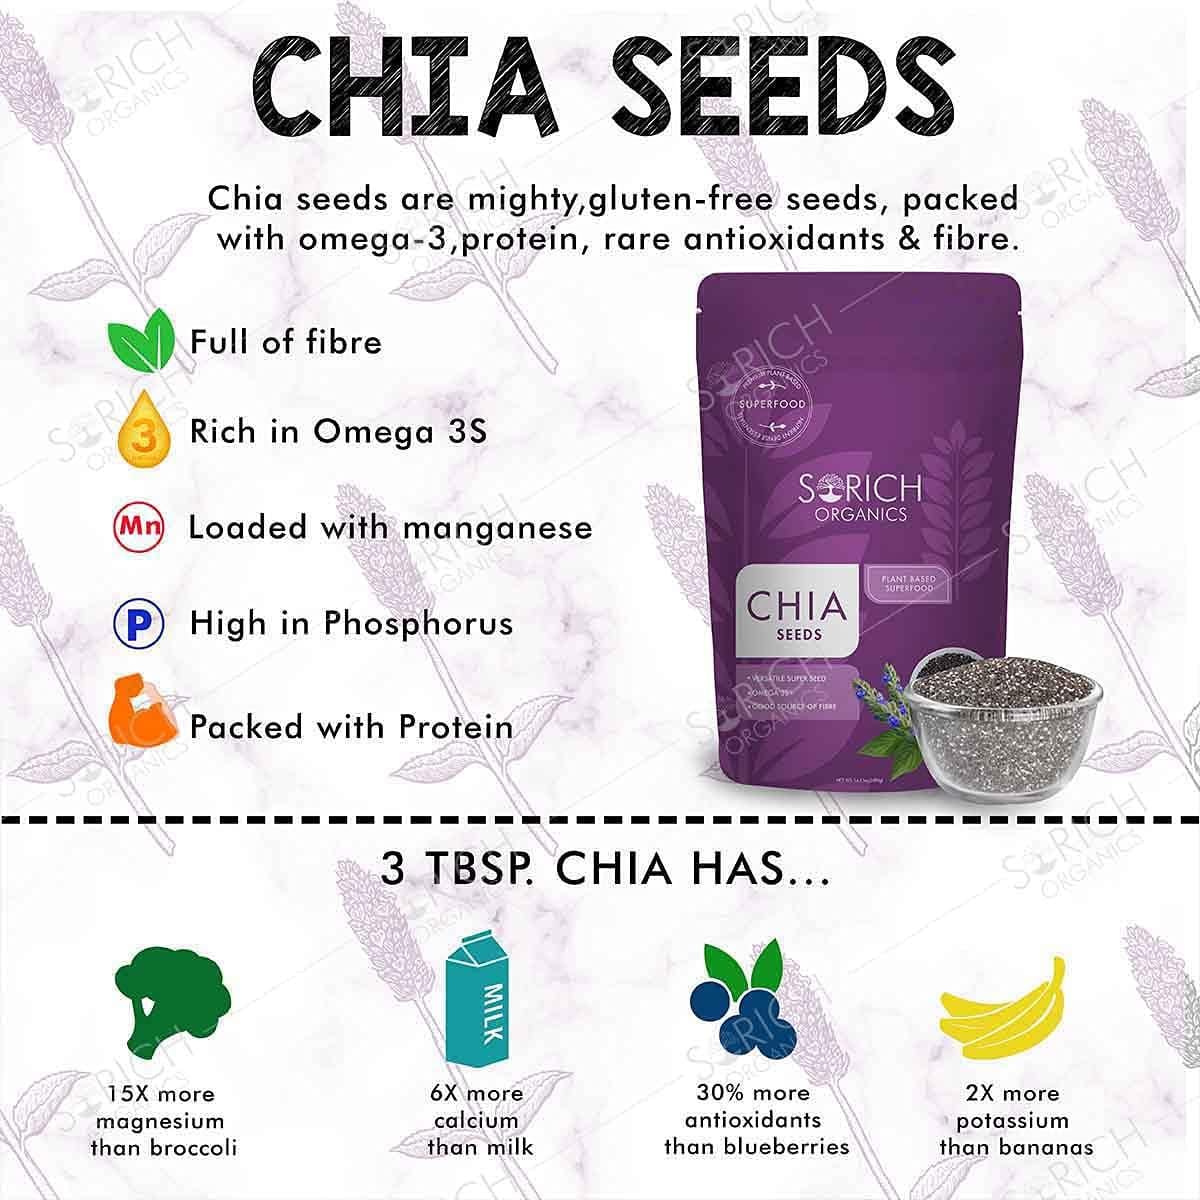 Combo Pack of Pumpkin Seeds 400 Gm & Chia Seeds 400 Gm-800 Gm - Sorichorganics